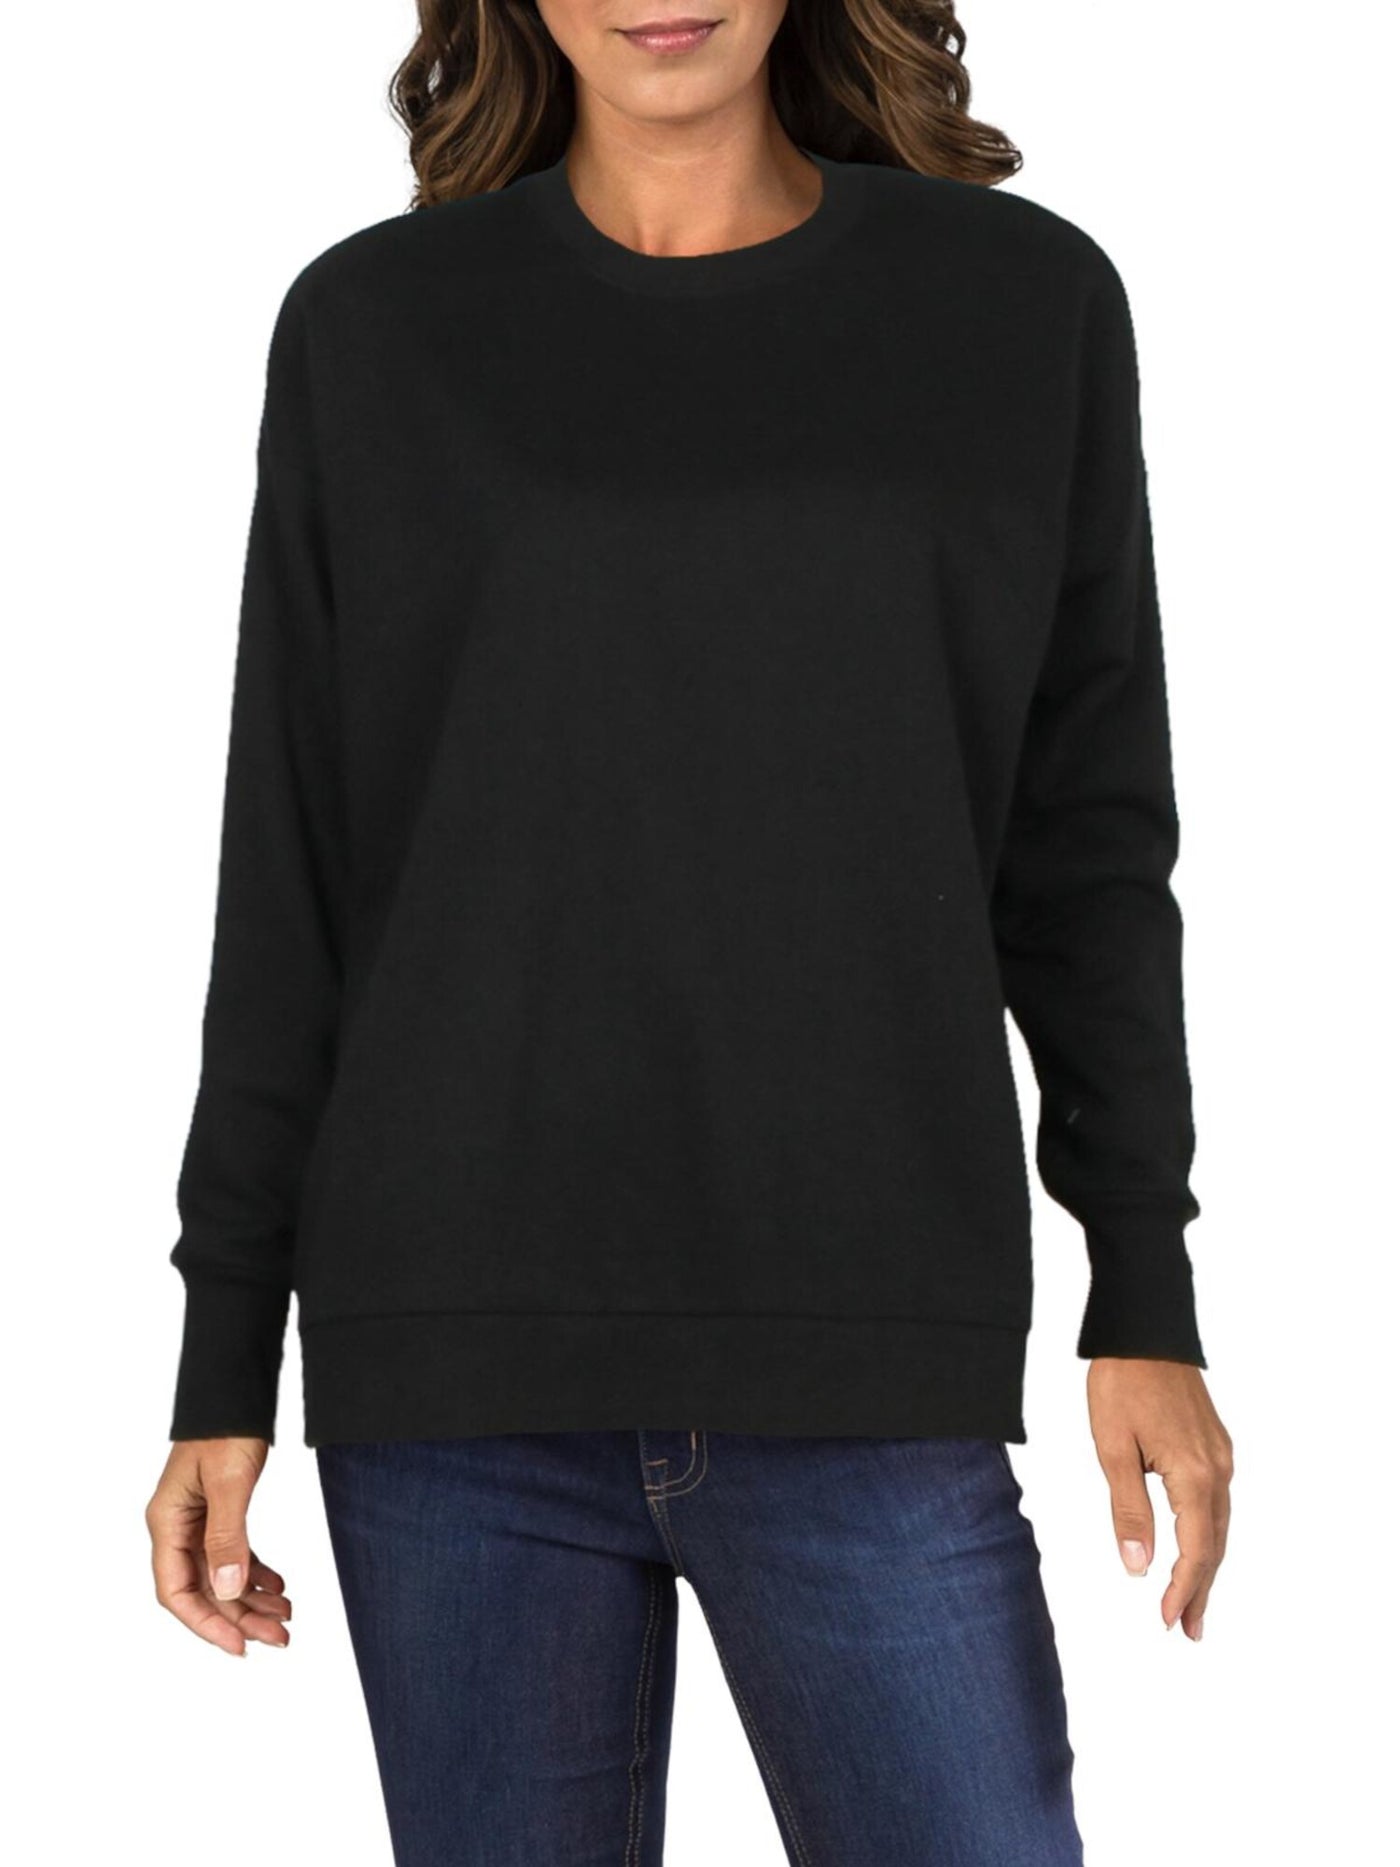 DANIELLE BERNSTEIN Womens Black Long Sleeve Jewel Neck Sweater S